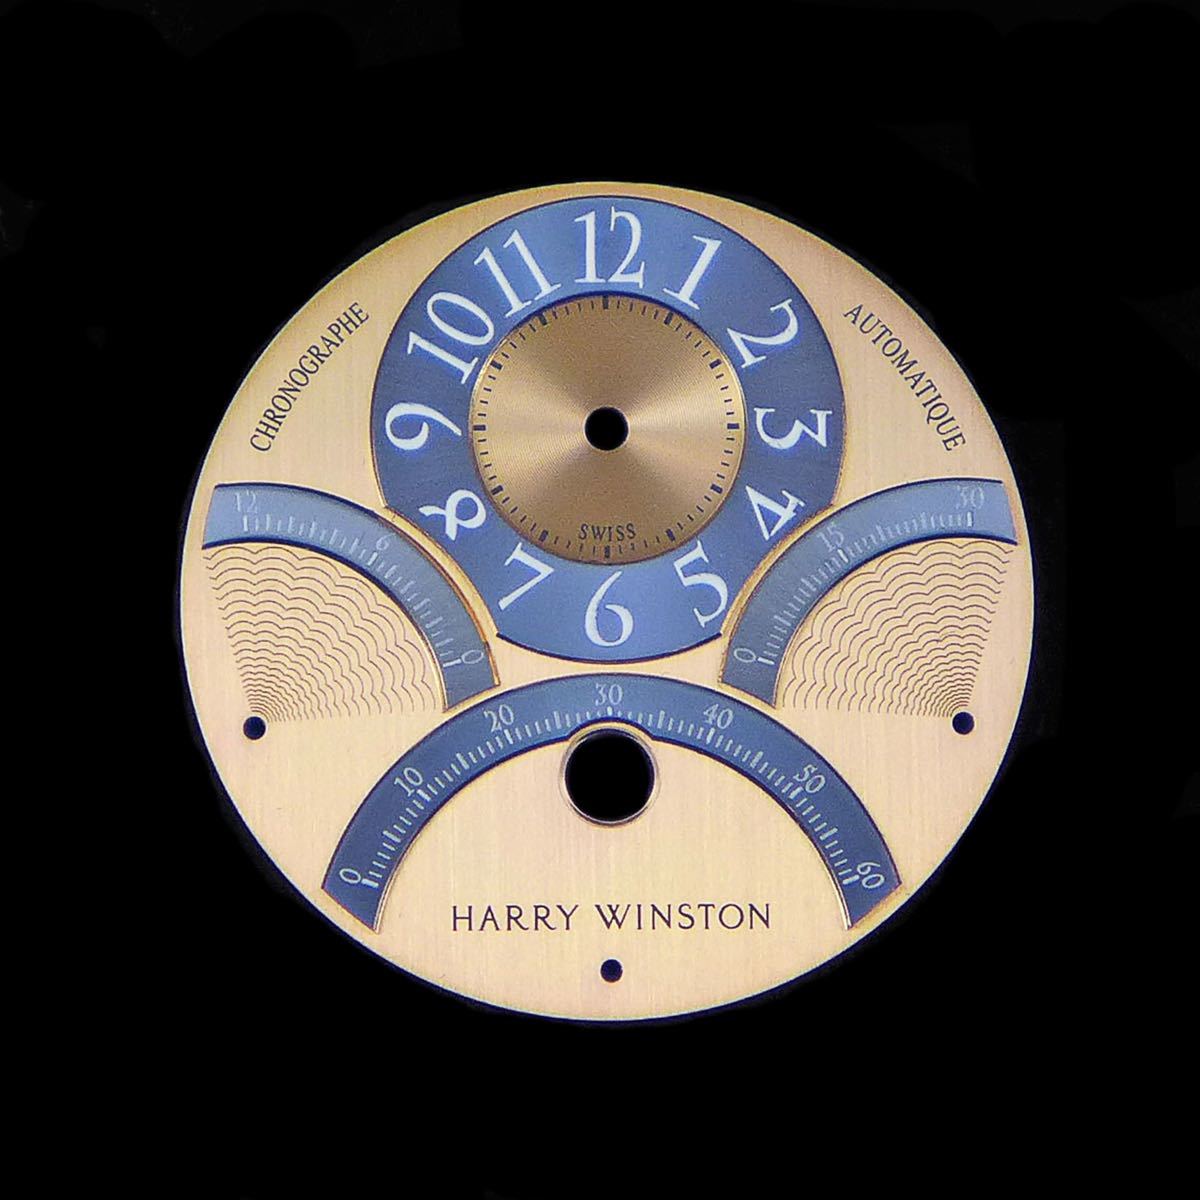 Harry Winston ハリーウィンストン オーシャントリレトロ 純正 文字盤 400/MCRA44W ローズゴールド ネイビー色 44mm 超美品